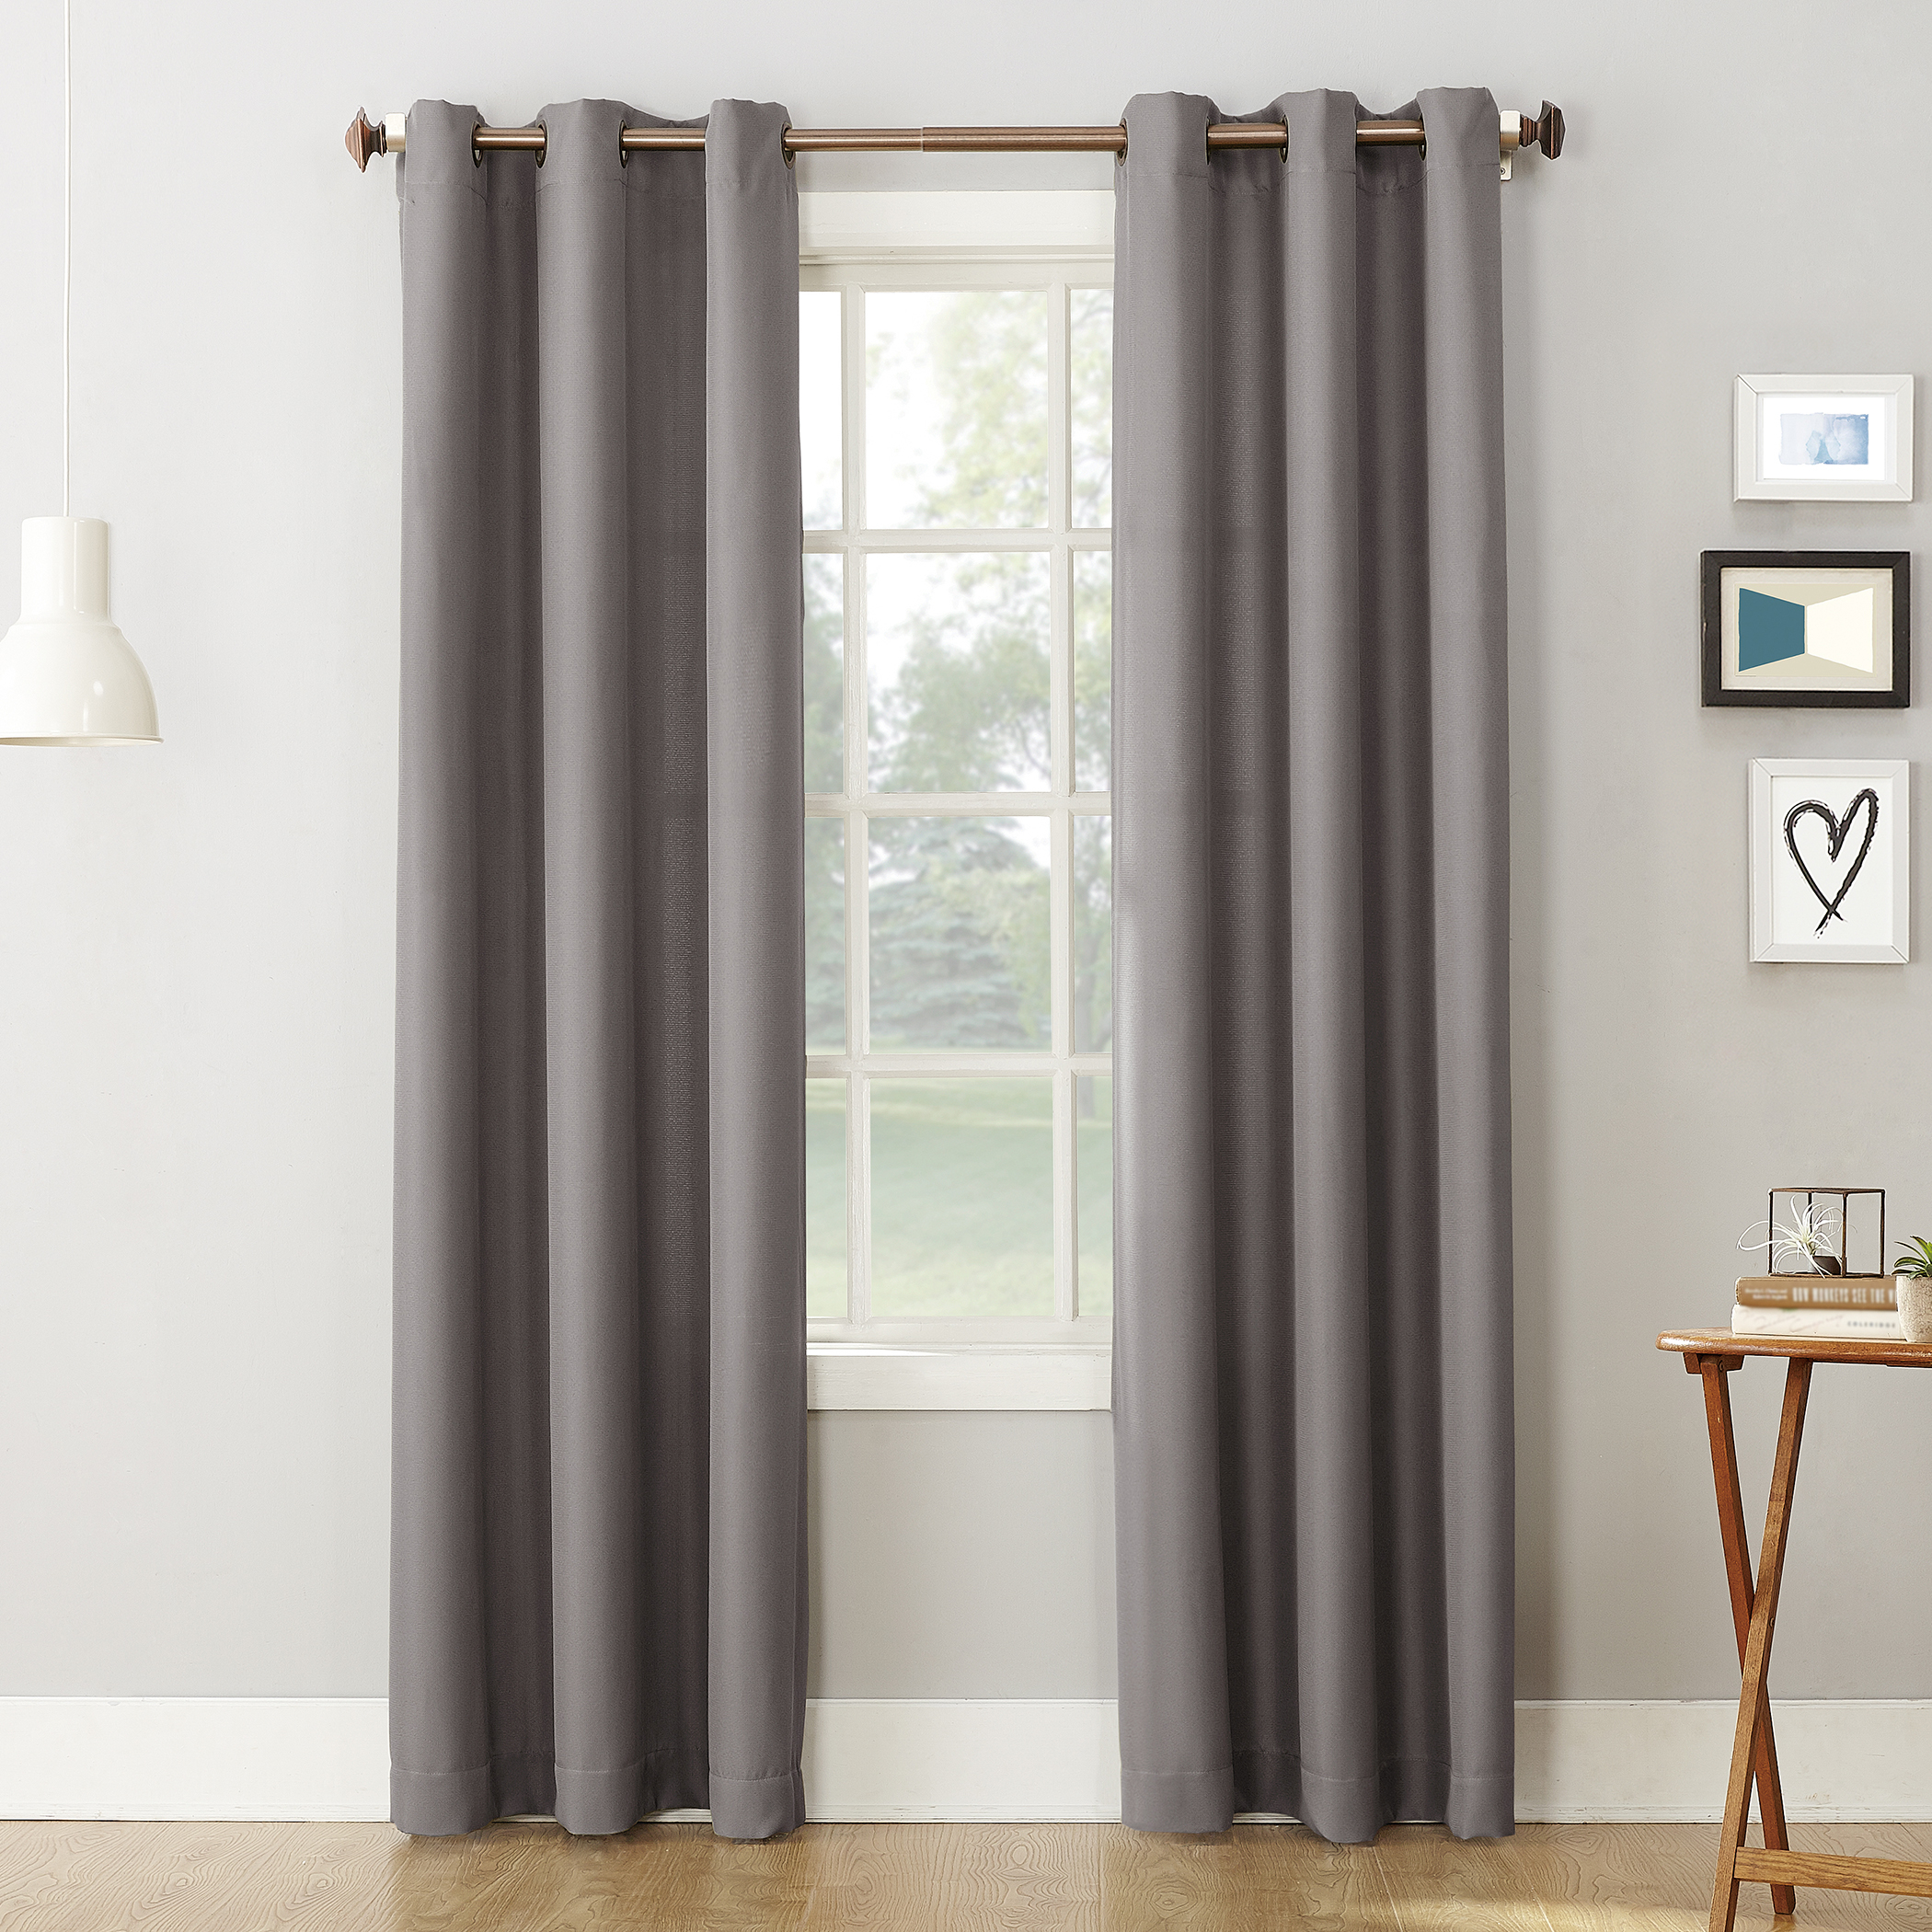 No. 918 Grommet Semi-Sheer Curtain Panel, 48.0" x 84.0" - image 1 of 7